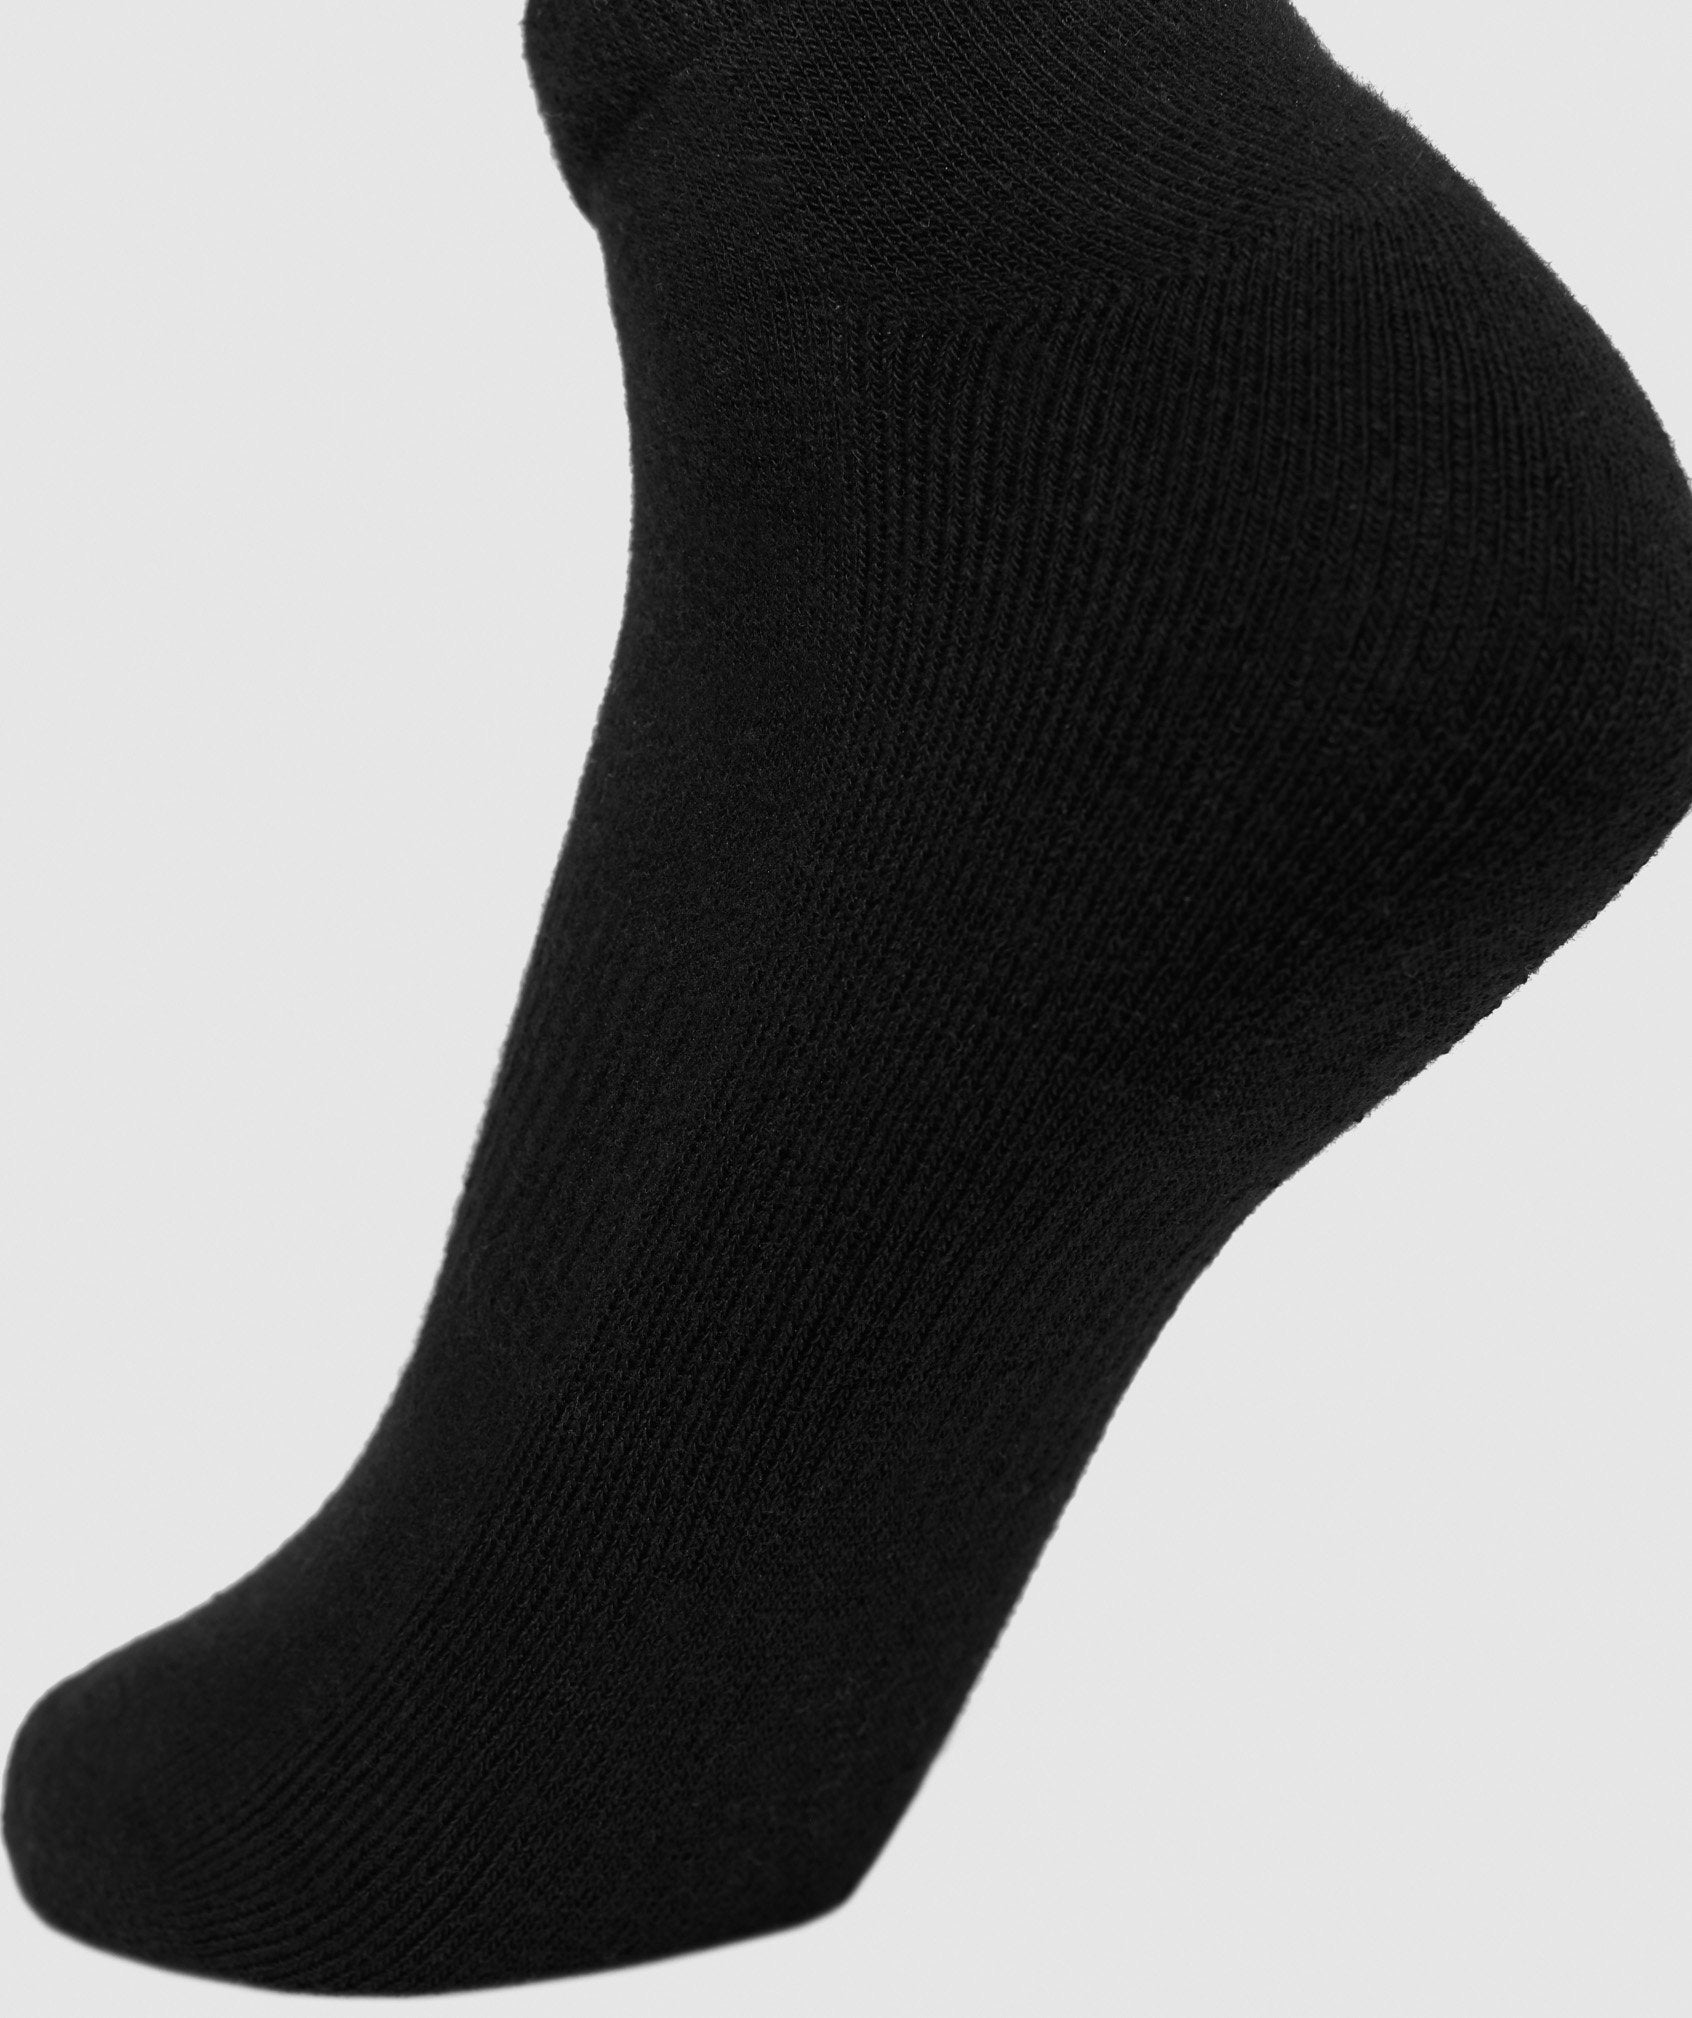 Mens Trainer Socks (3pk) in Black - view 4